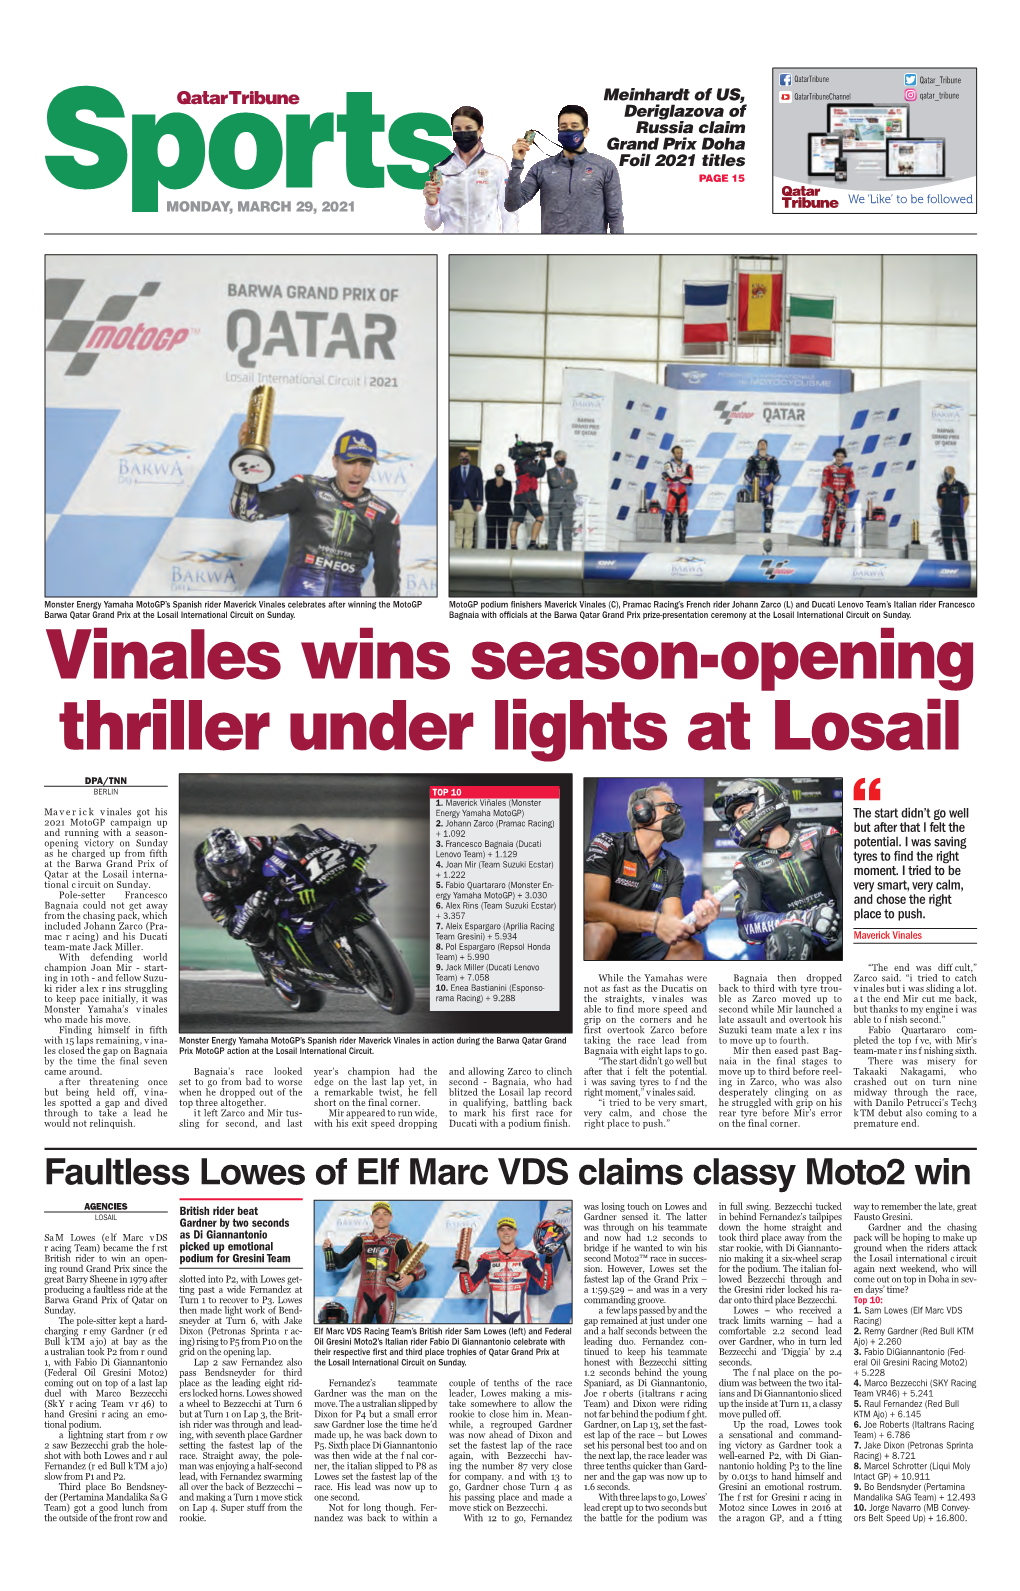 Vinales Wins Season-Opening Thriller Under Lights at Losail